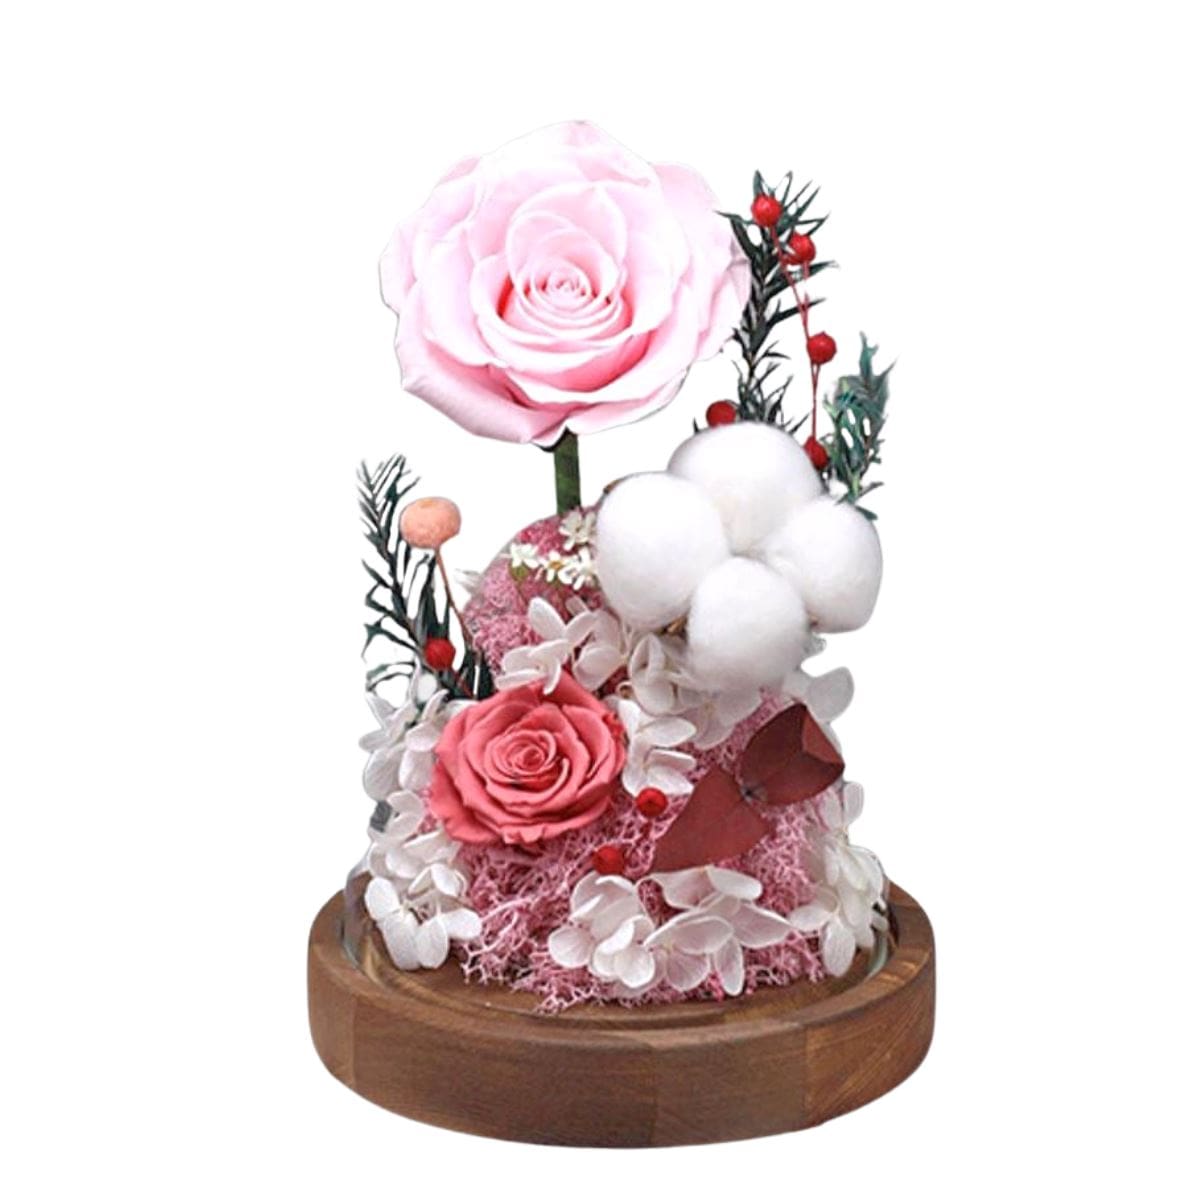 Hanata - Preserved Hydrangea/Rose Dome - Flowers - Pink はなた - Preserved Flowers & Fresh Flower Florist Gift Store